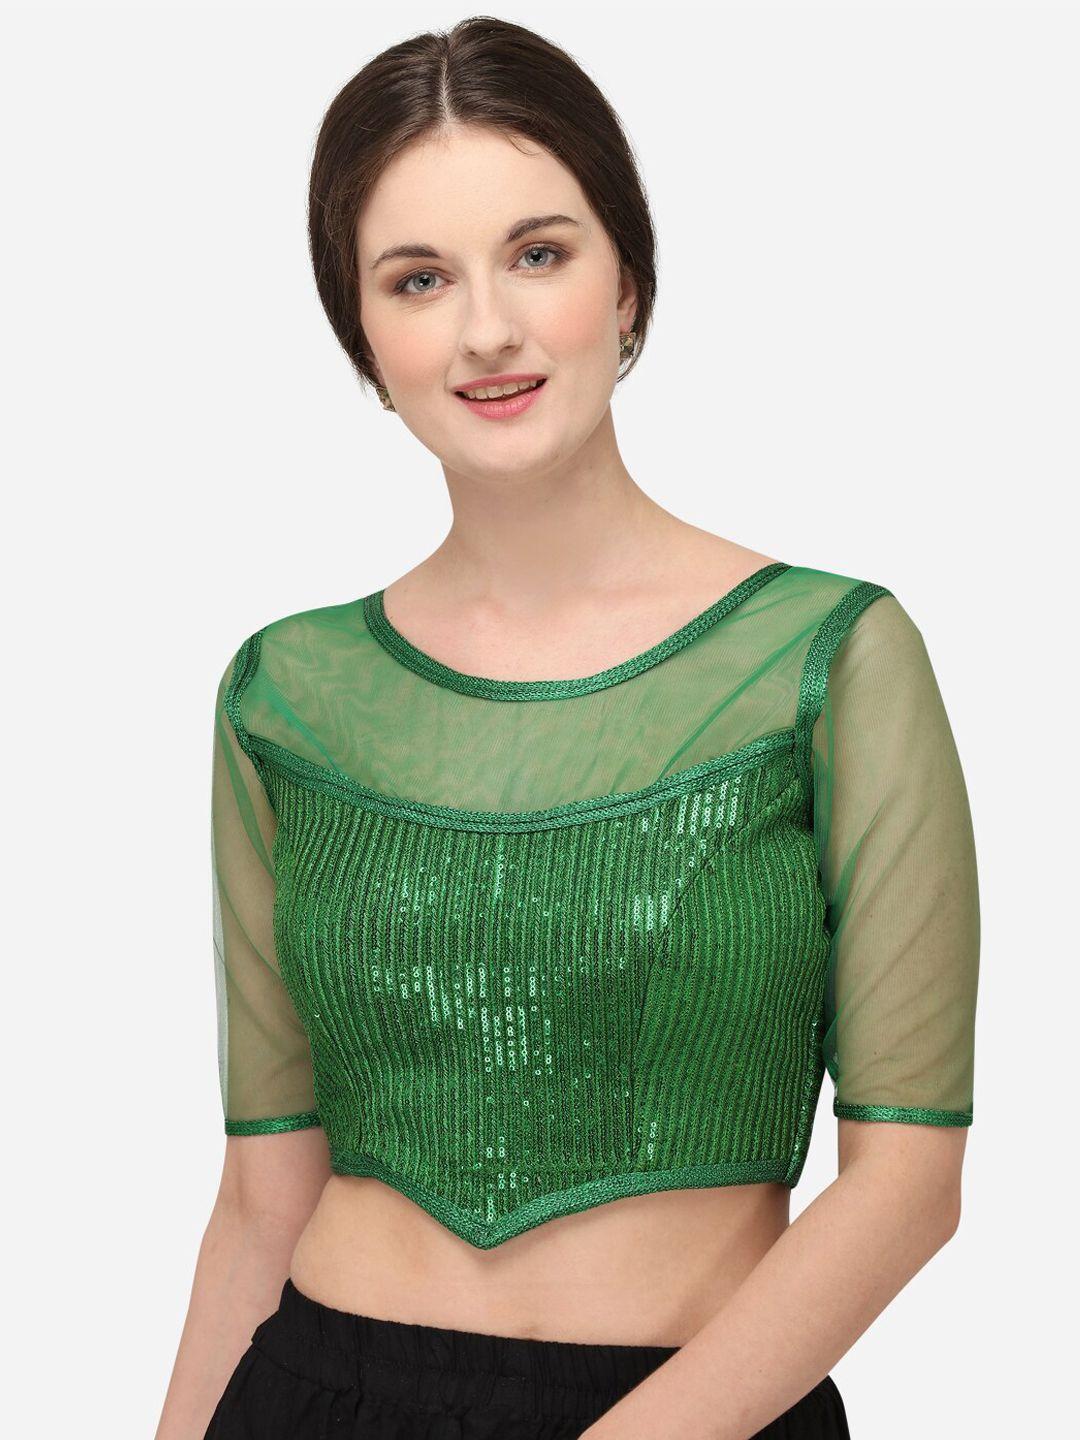 fab-dadu-embroidered-saree-blouse